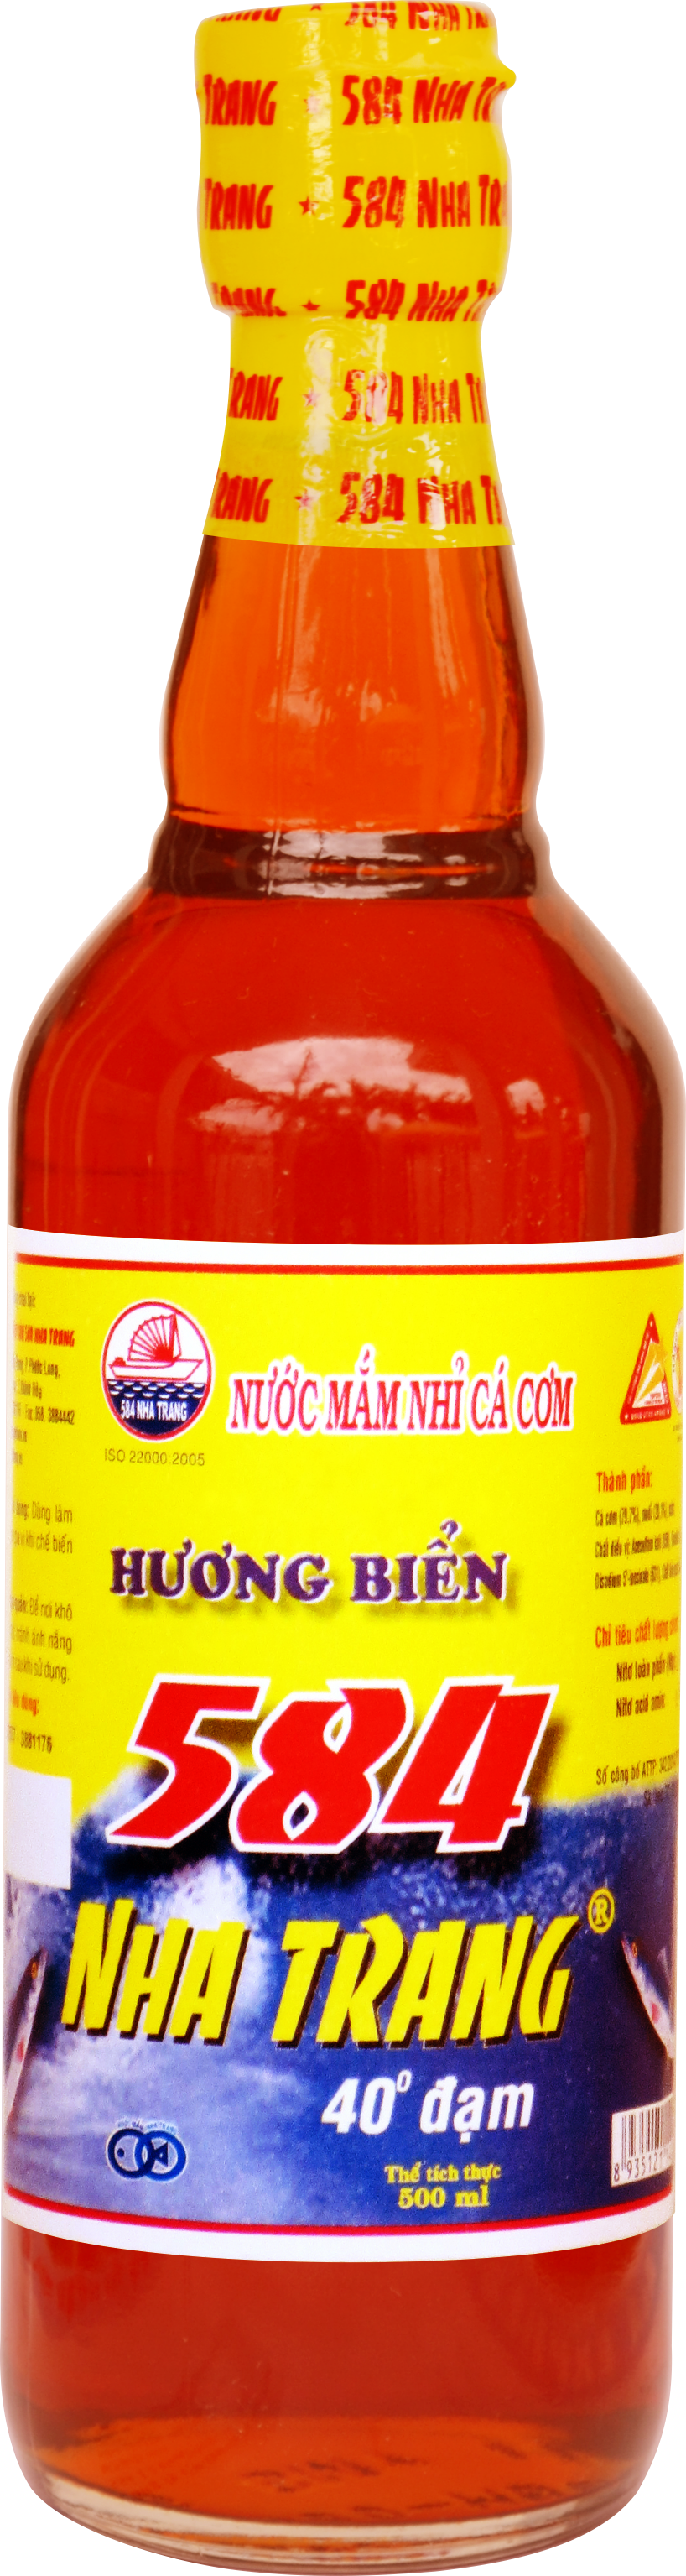 584 Fish Sauce Nha Trang 40oN glass bottle  500ml 